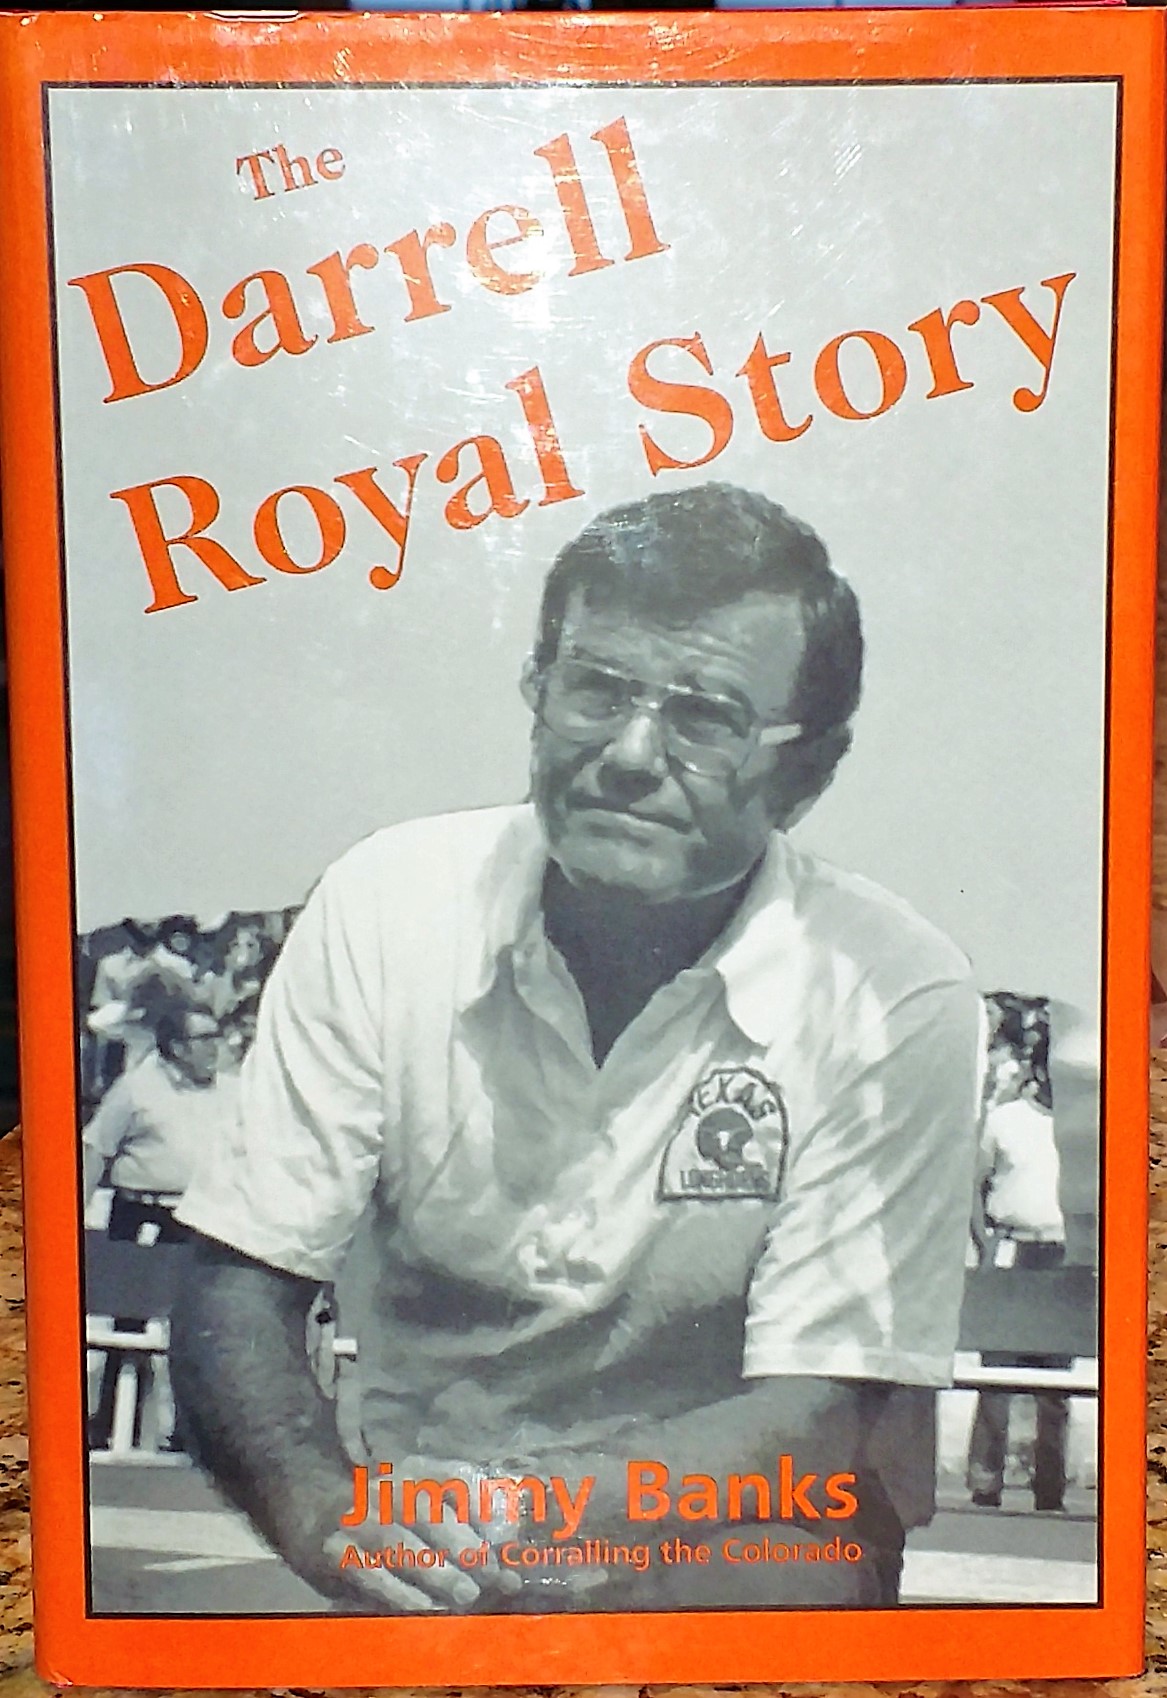 The Darrell Royal Story.jpg